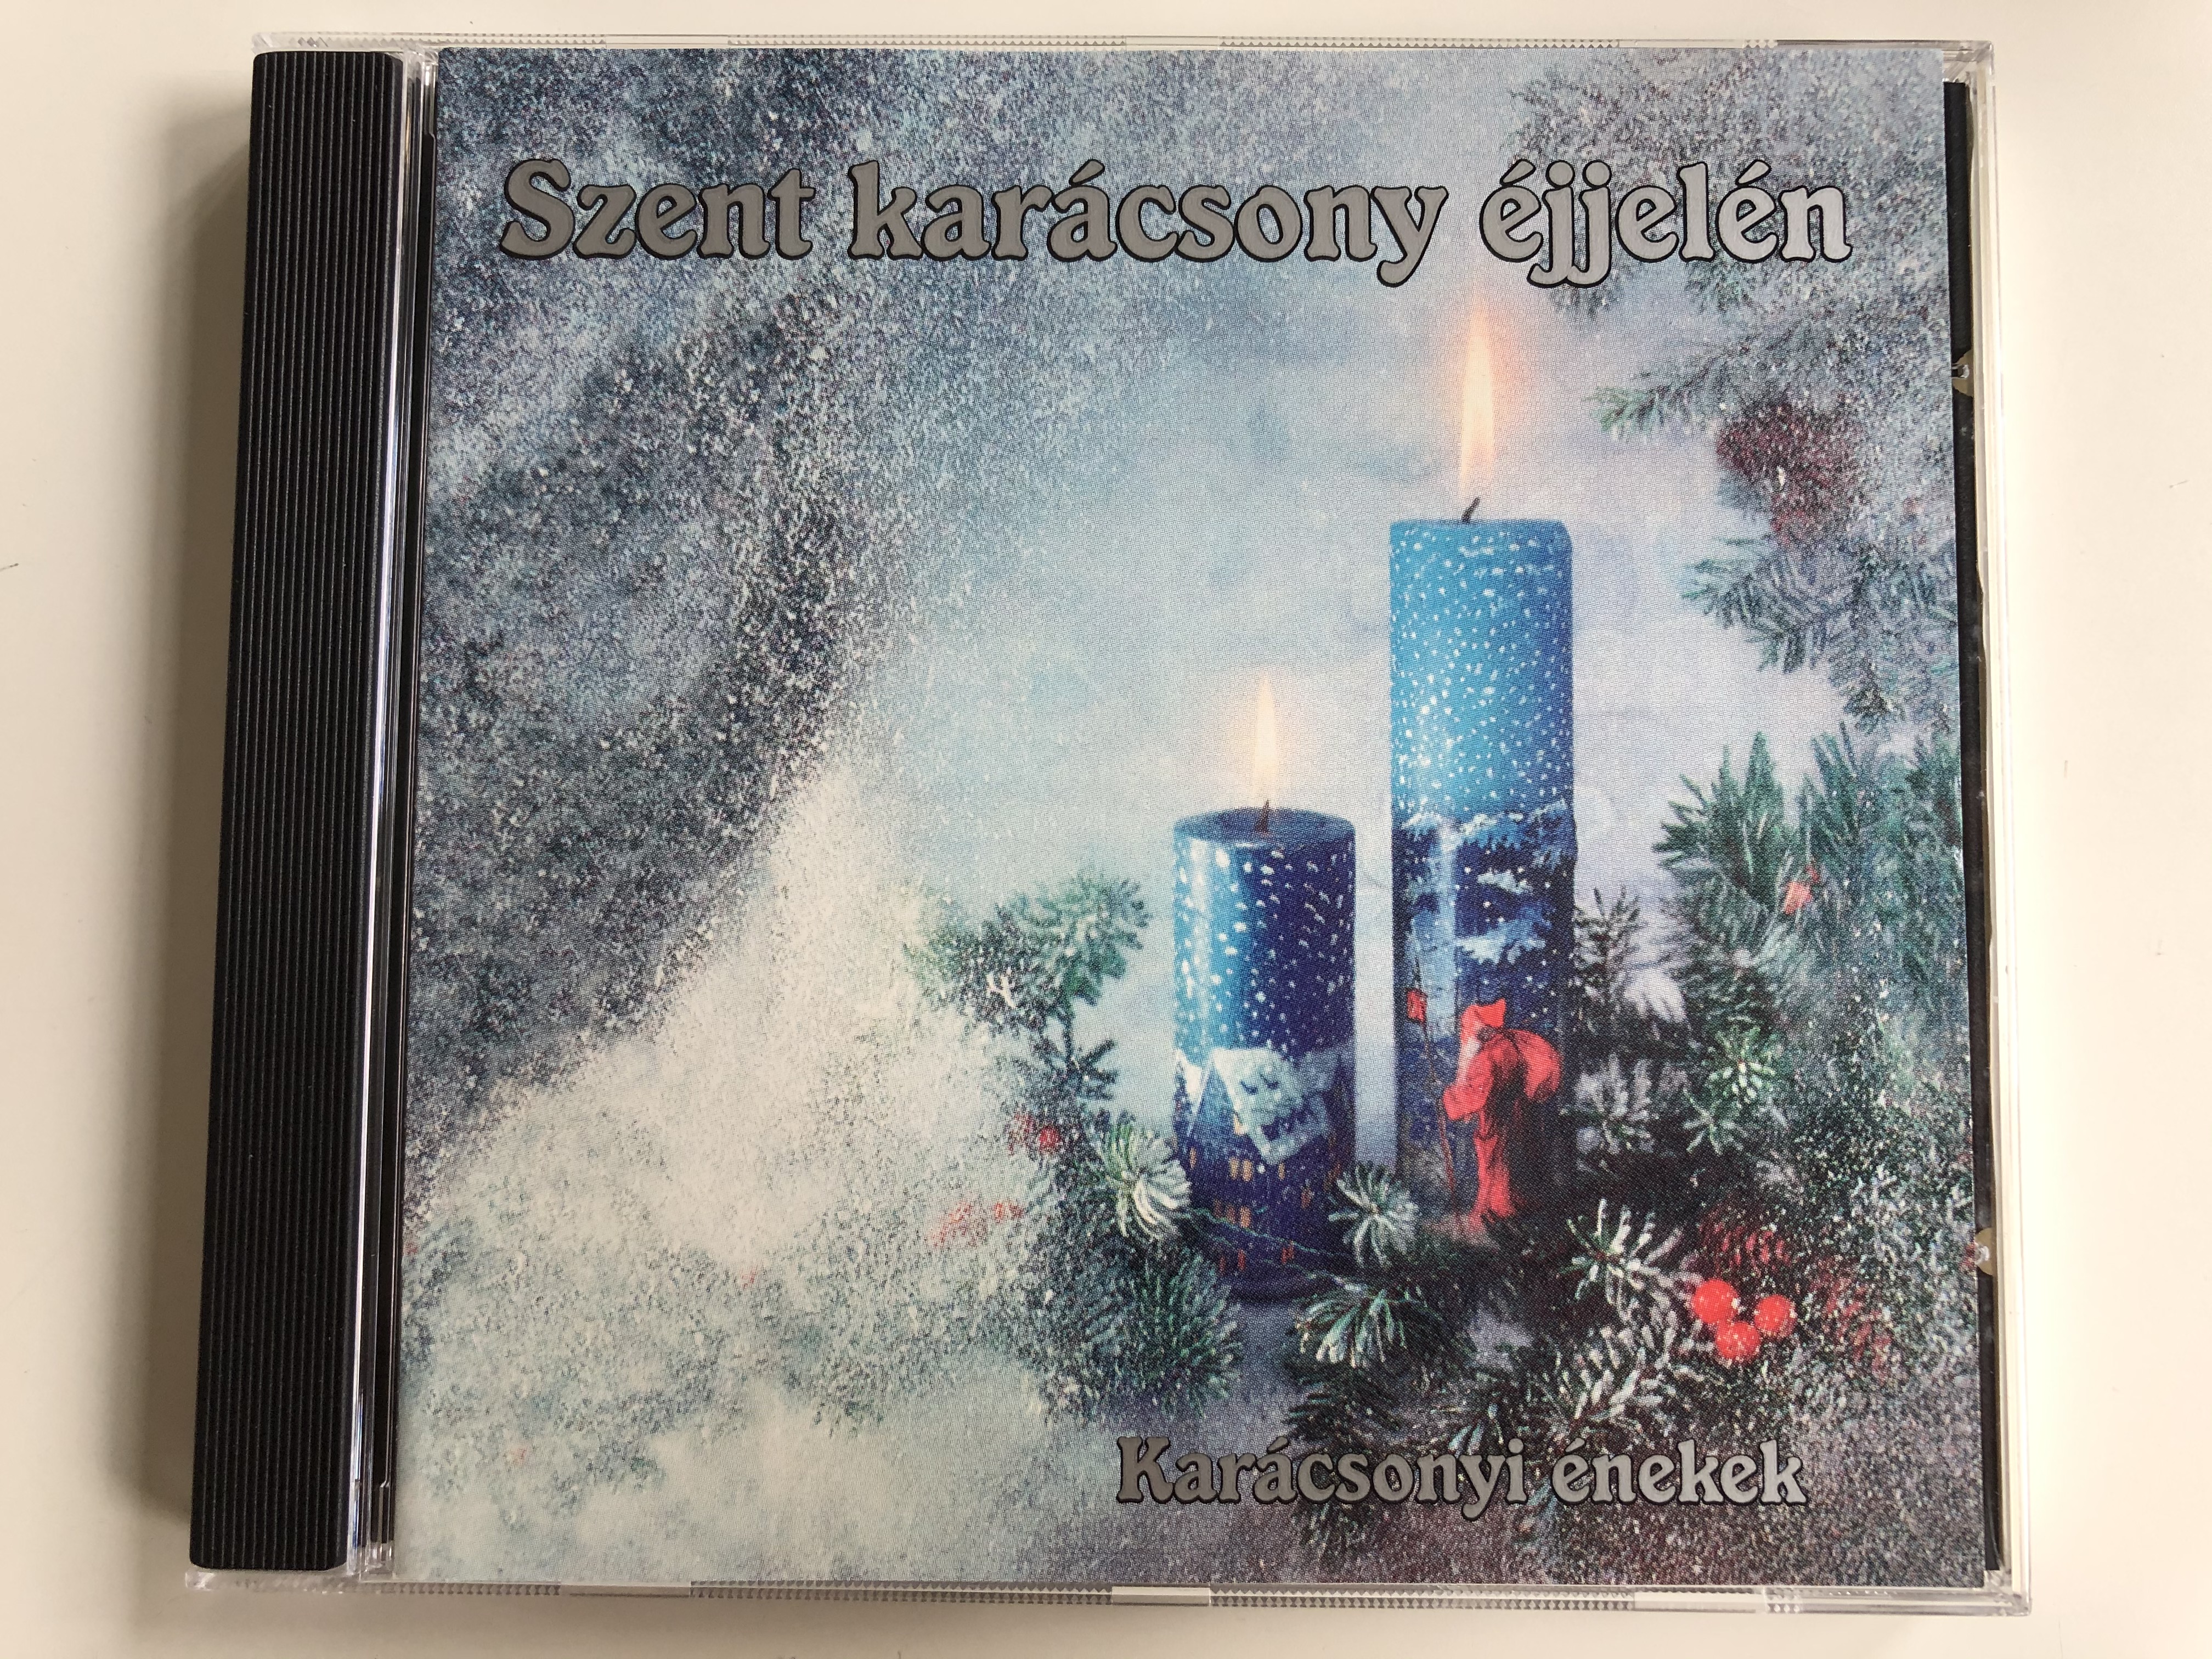 szent-kar-csony-jjel-n-karacsonyi-nekek-e.z.s.-music-audio-cd-97052-e.z.s-1-.jpg